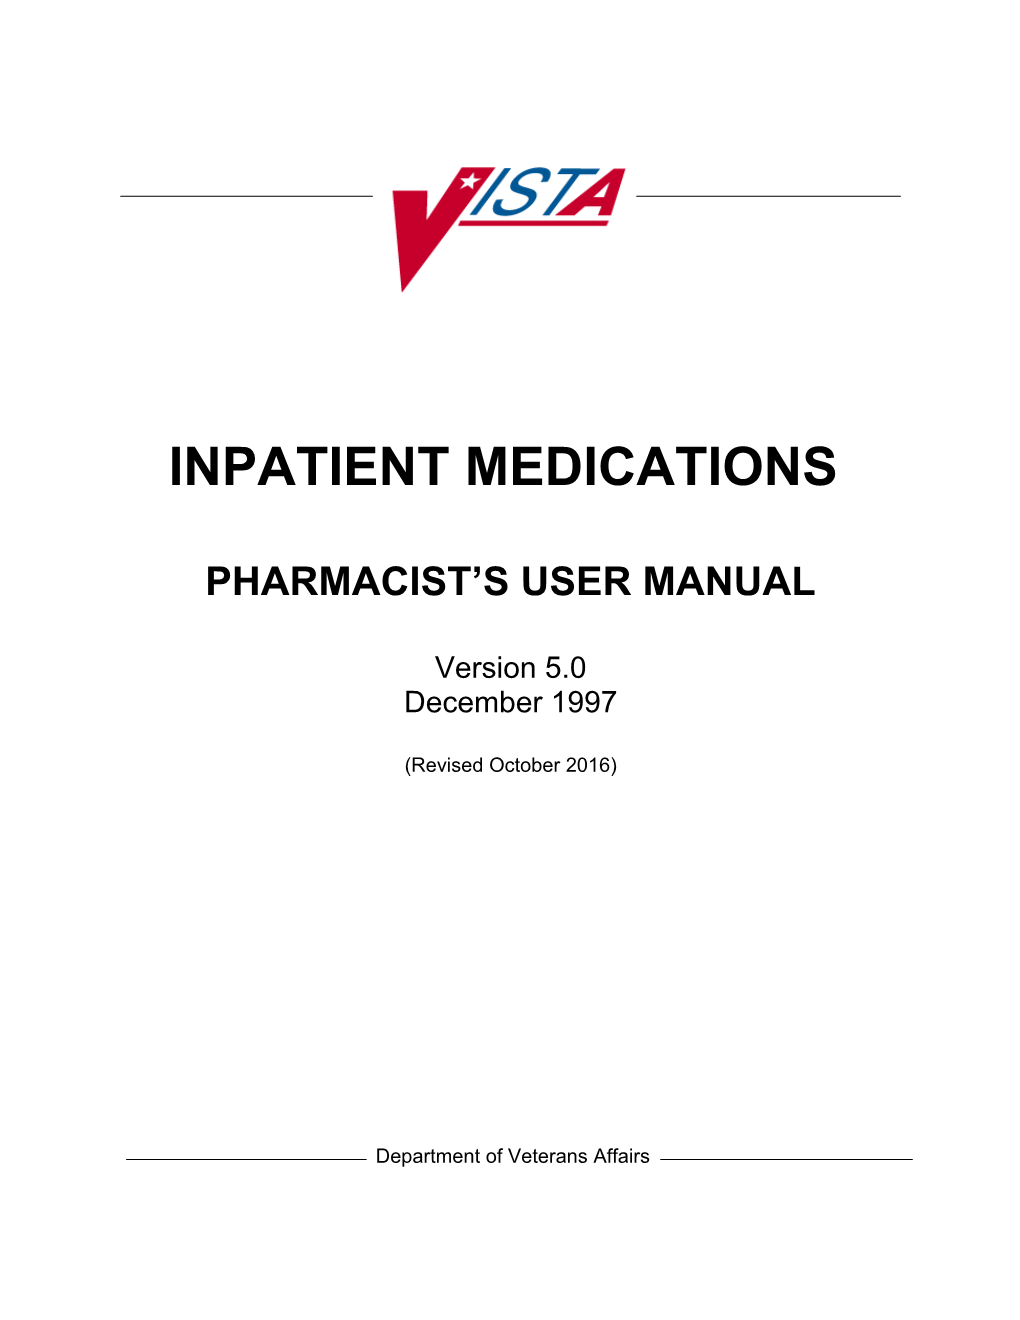 Department of Veterans Affairs Inpatient Medications Pharmacist's User Manual